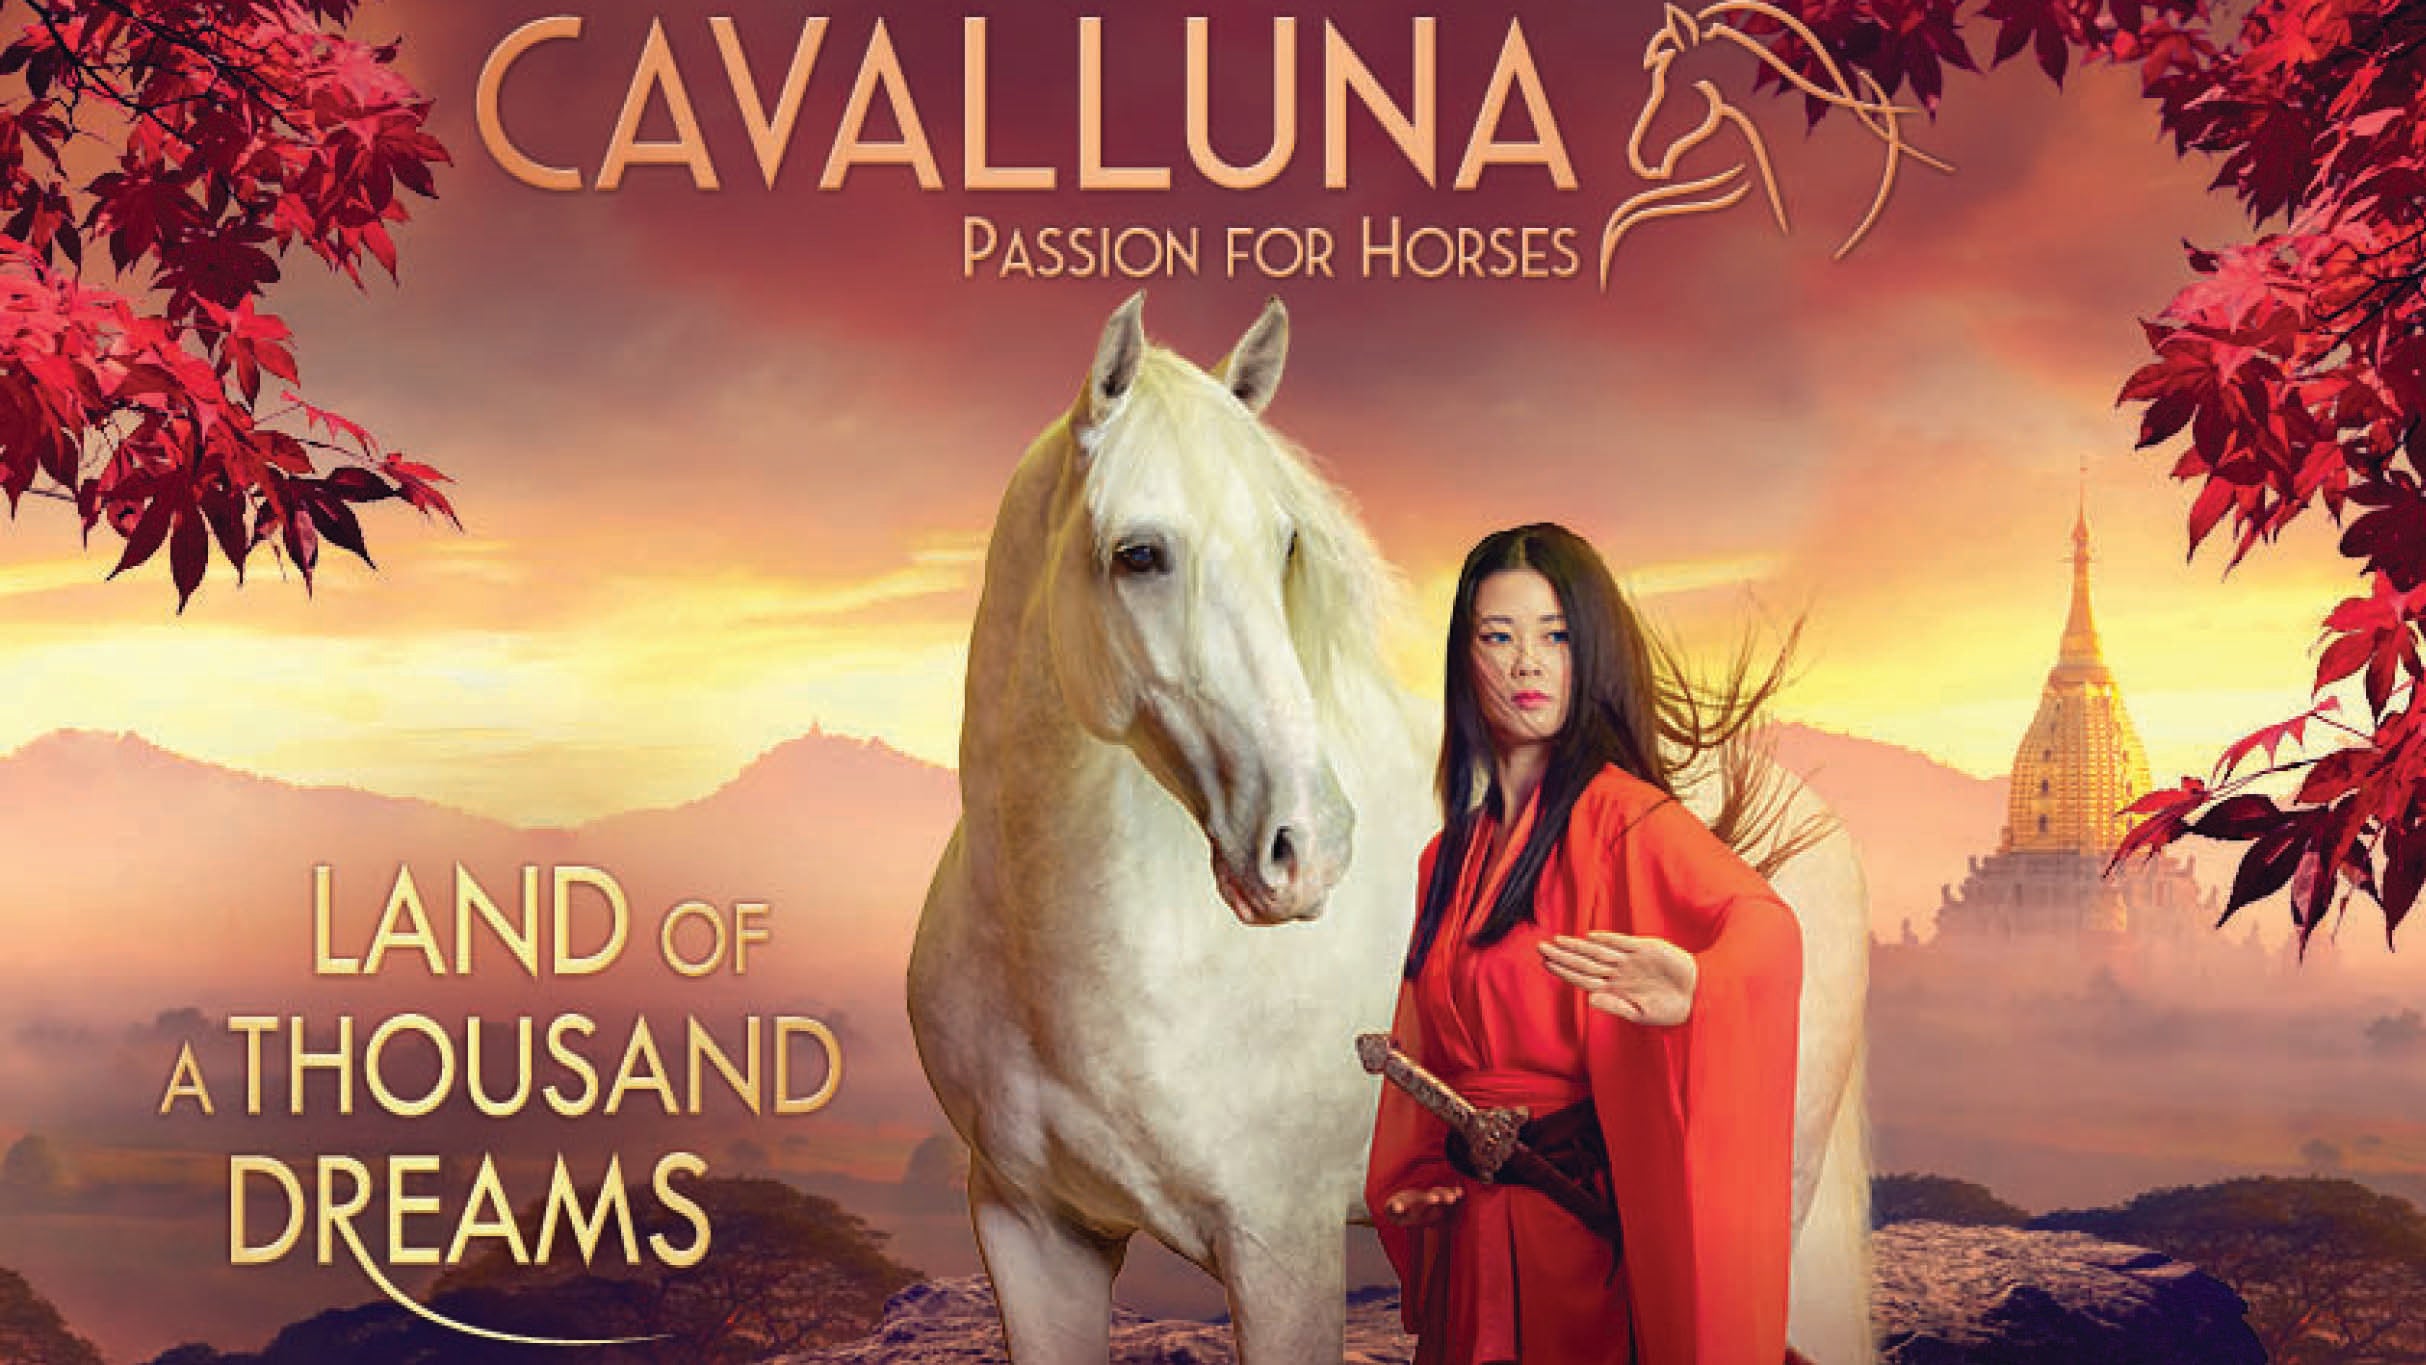 Cavalluna, Land of a thousand dreams